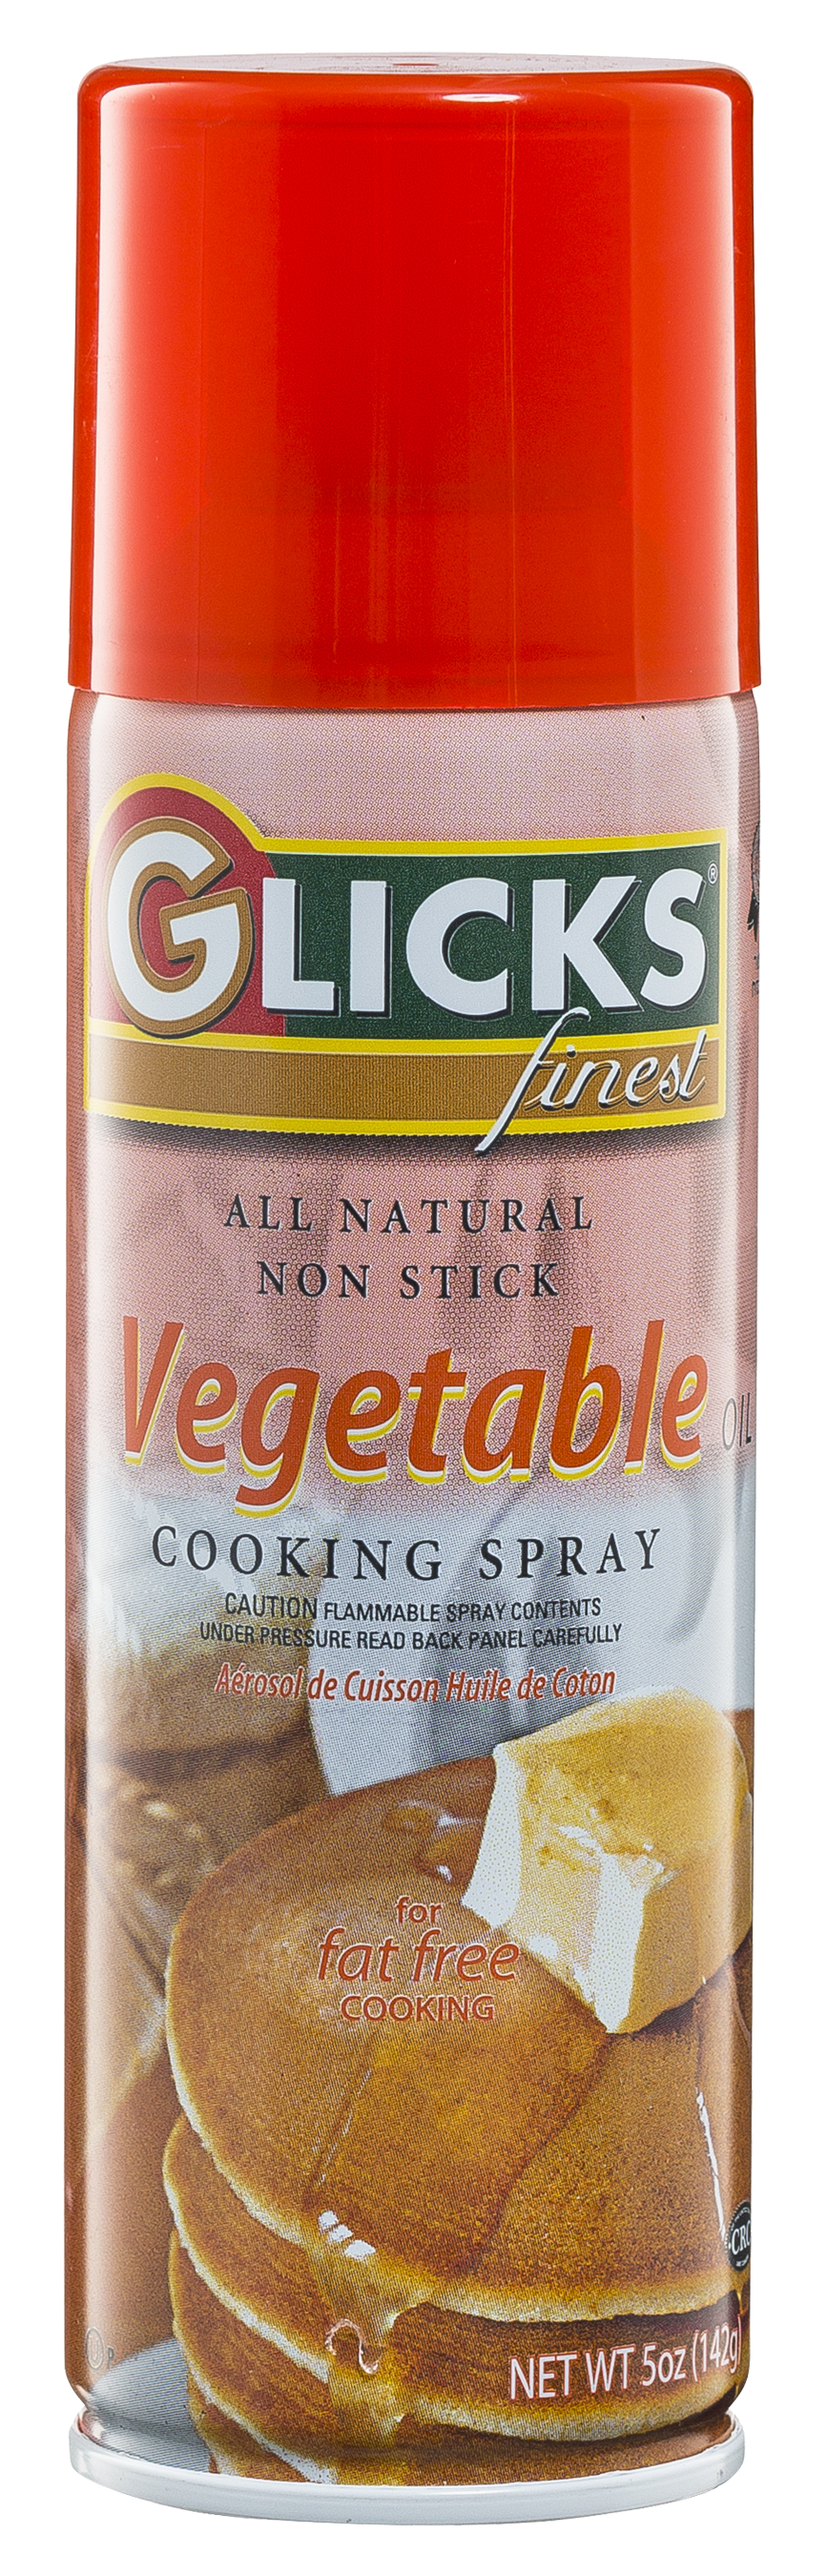 Glicks Vegetable Oil Cooking Spray - Kayco